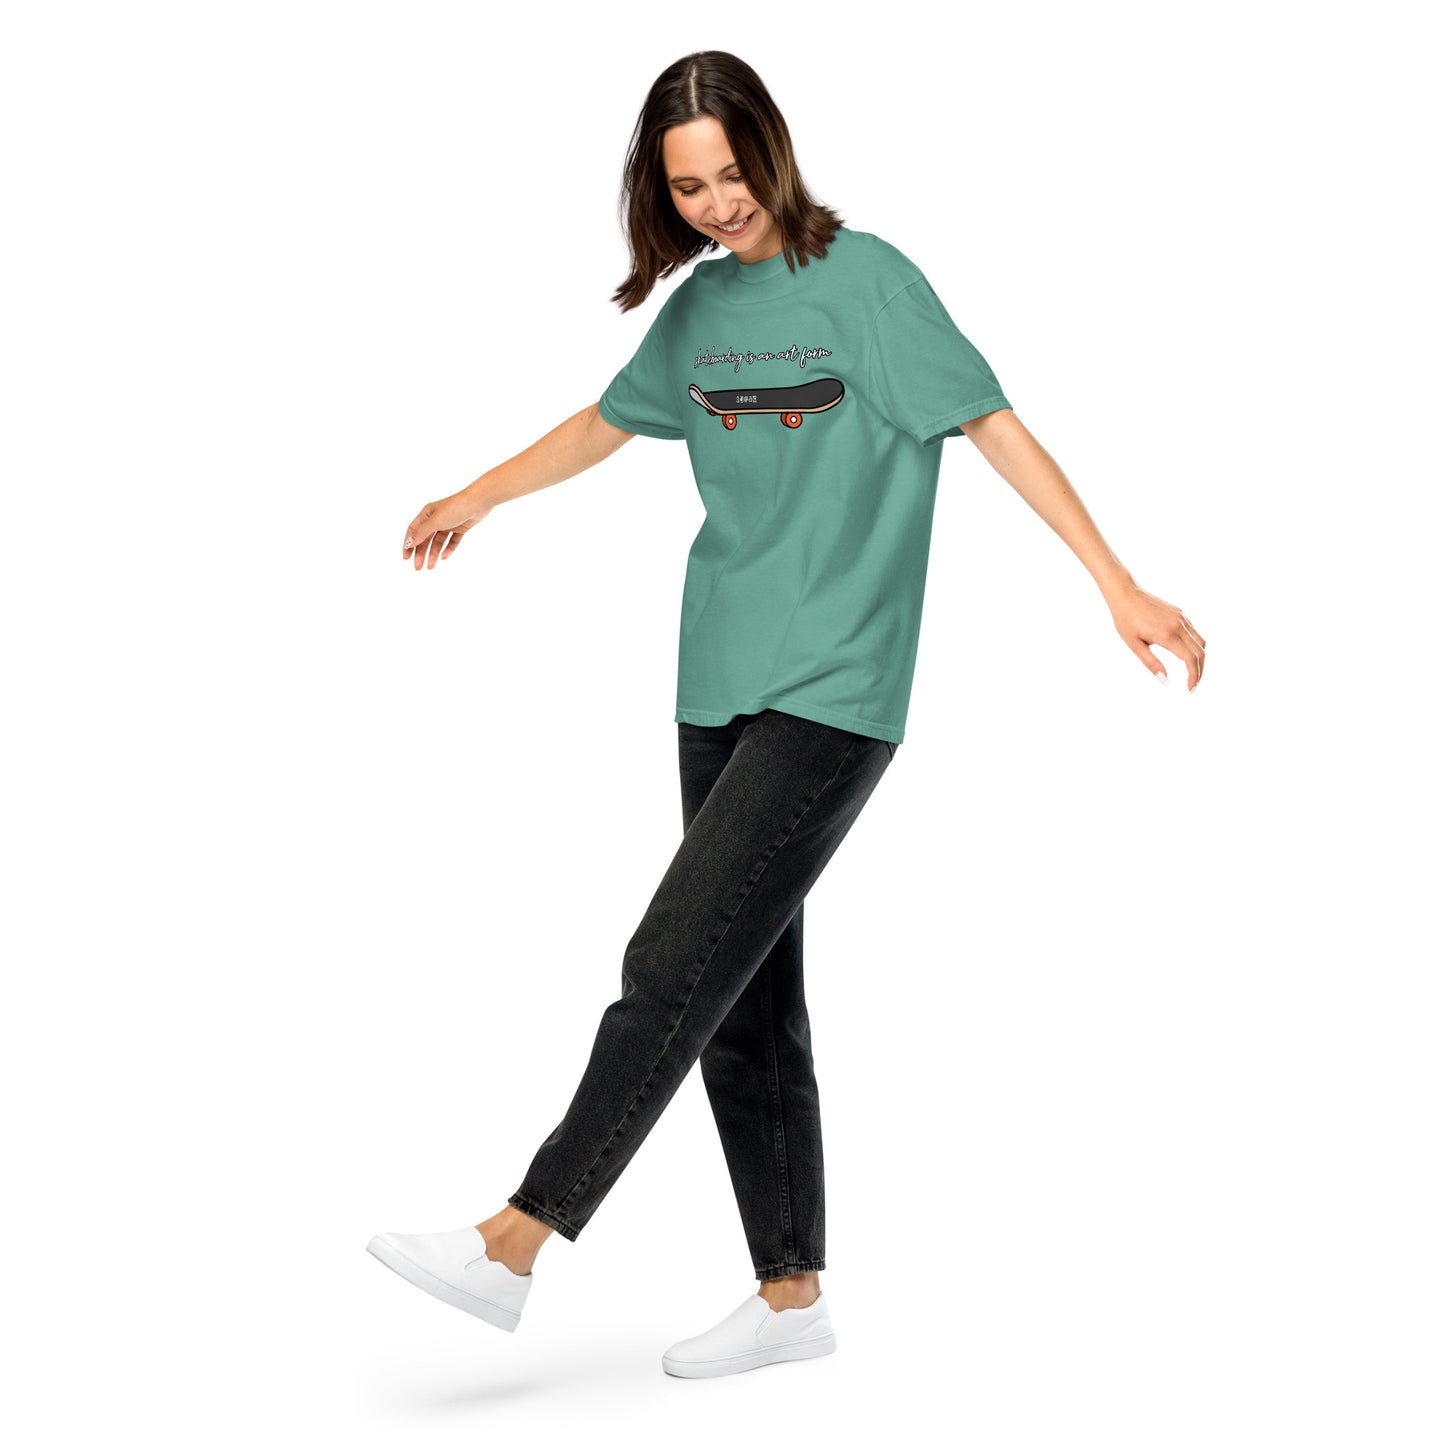 Unisex garment-dyed heavyweight t-shirt "Skating is an art form"